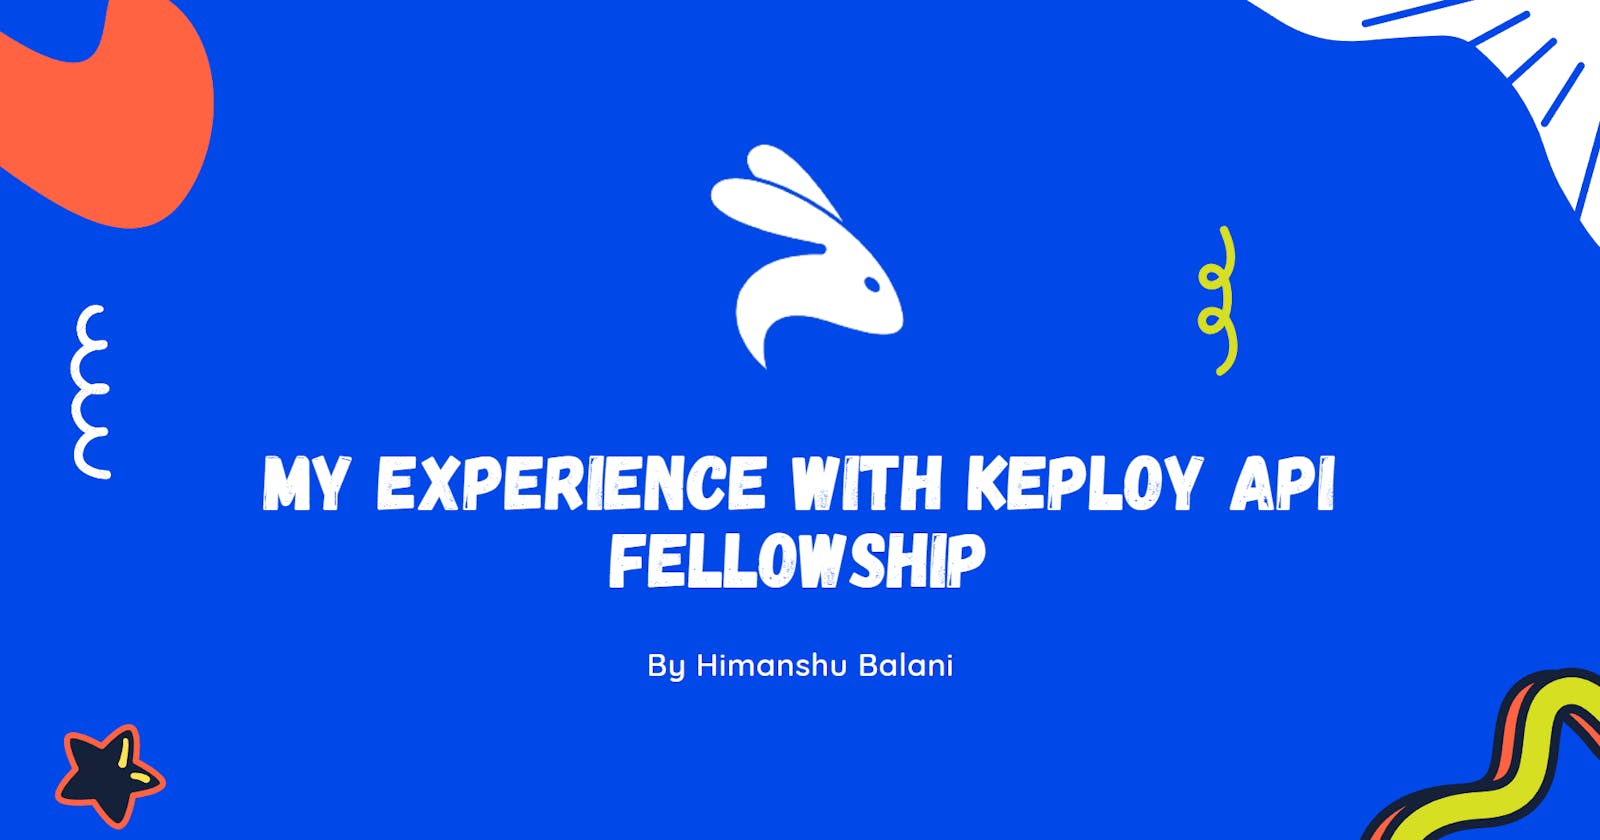 My experience with Keploy API Fellowship